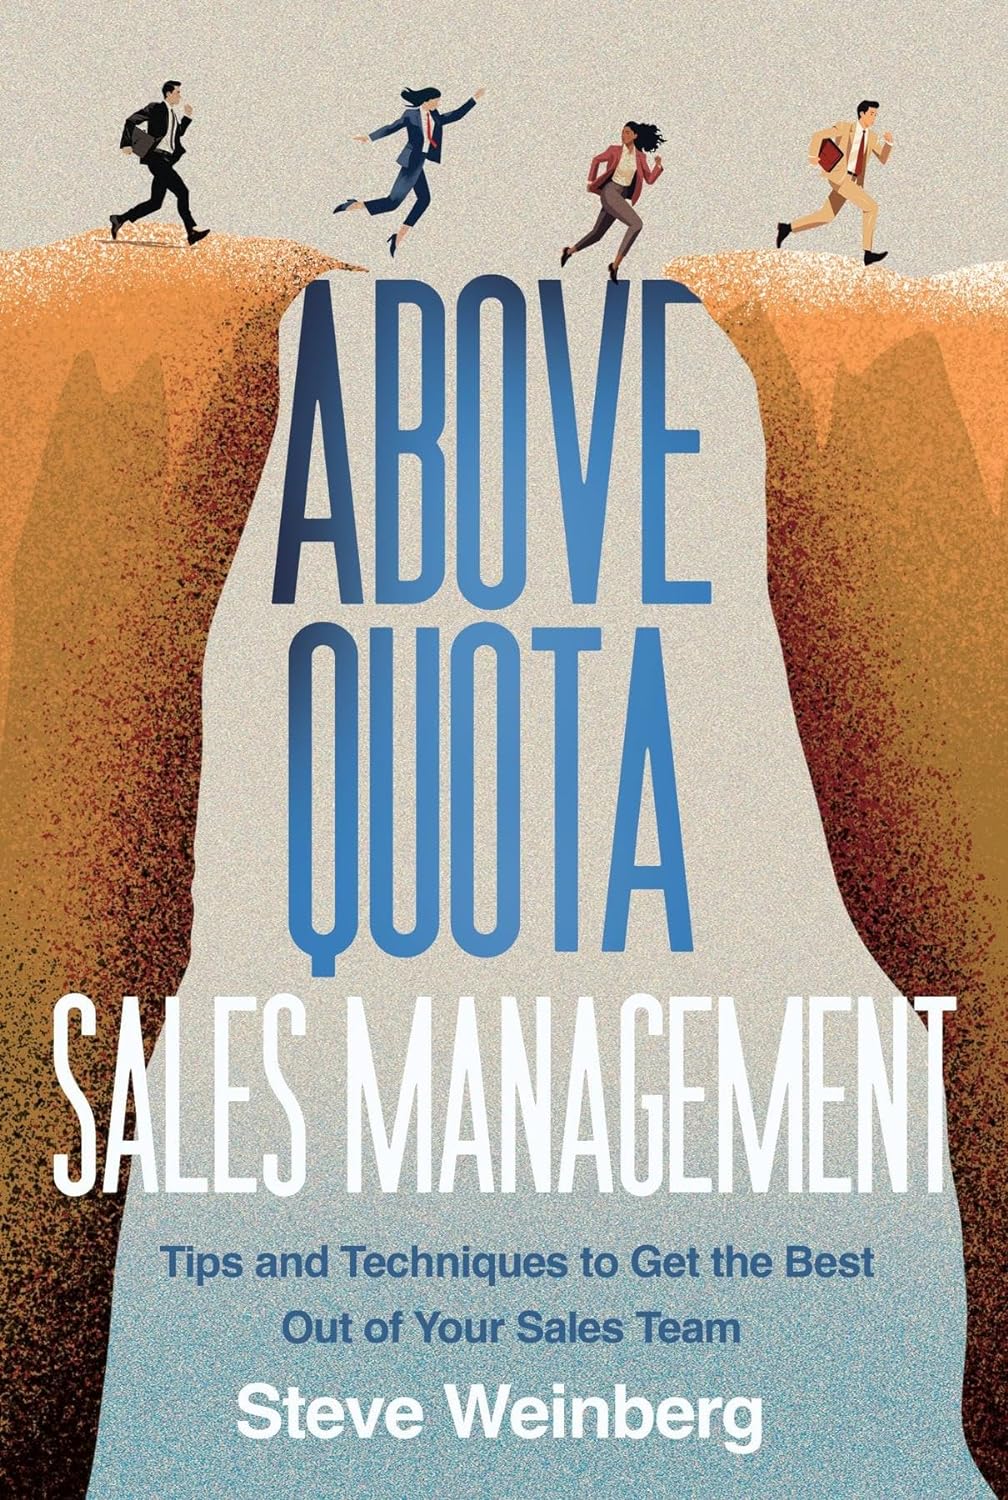 Above Quota Sales Management